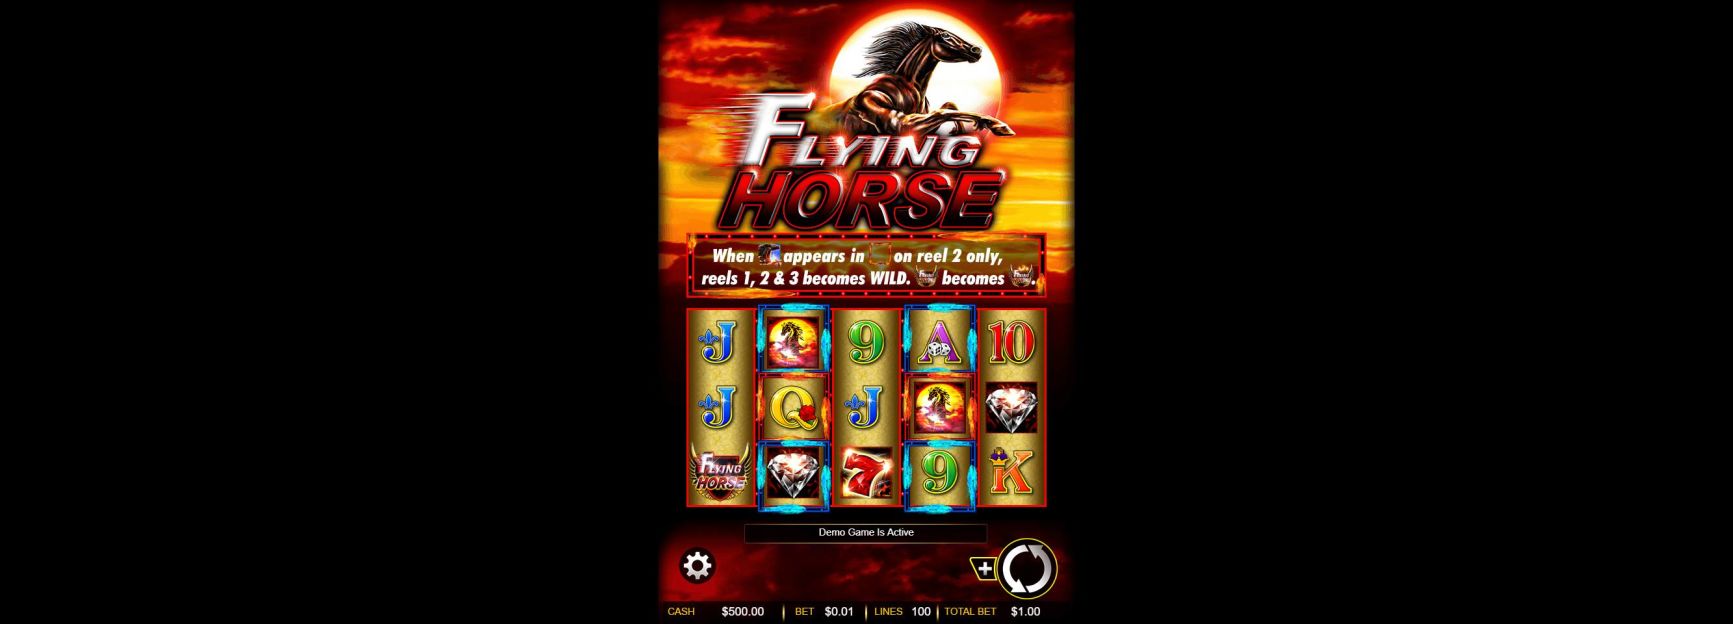 Flying Horse screenshot 1